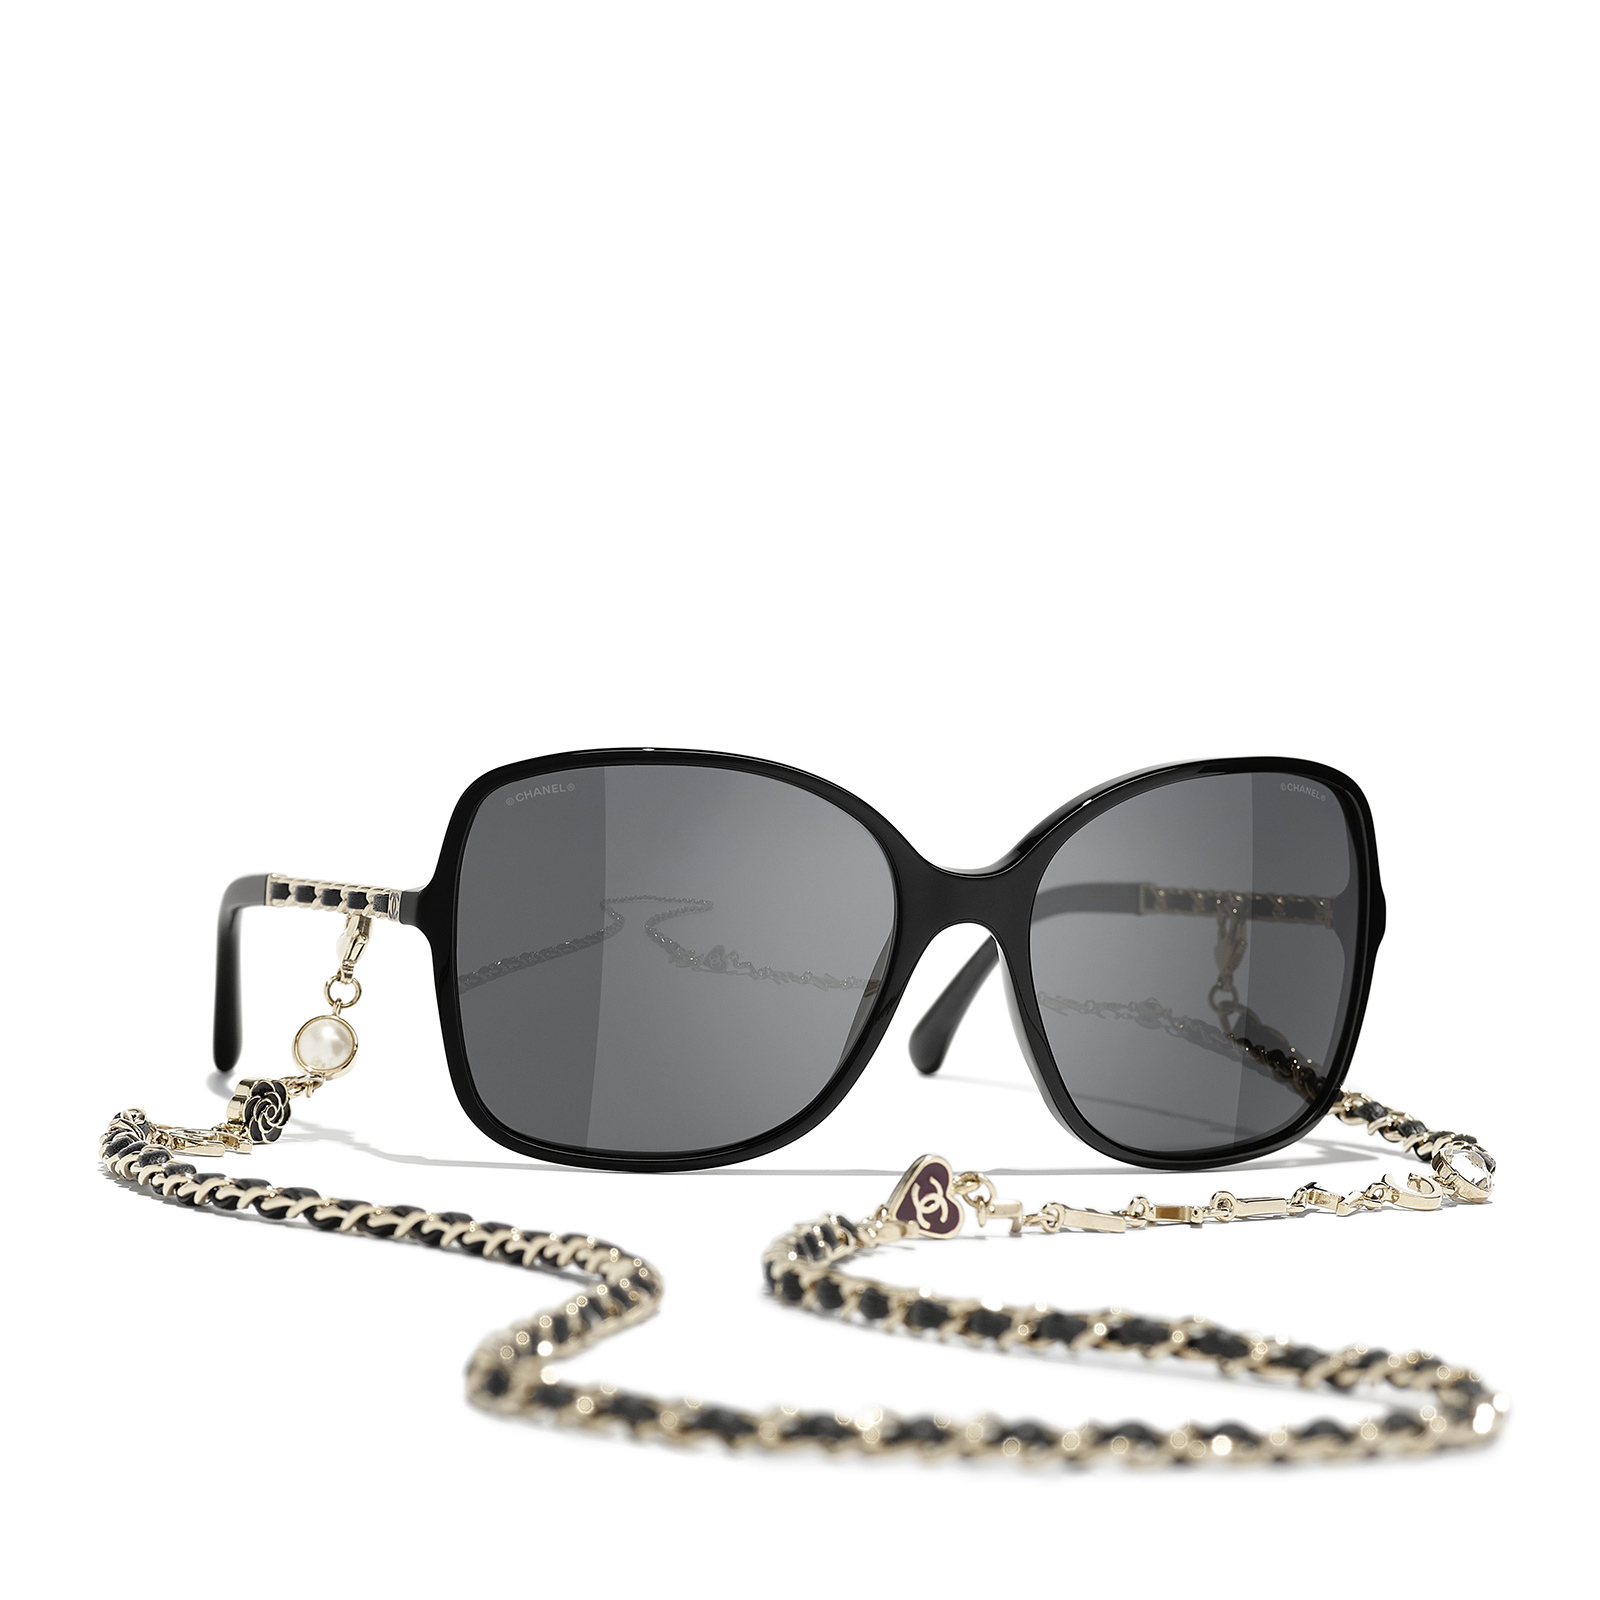 CHANEL square Sunglasses C622S4 Black & Gold - three-quarters view